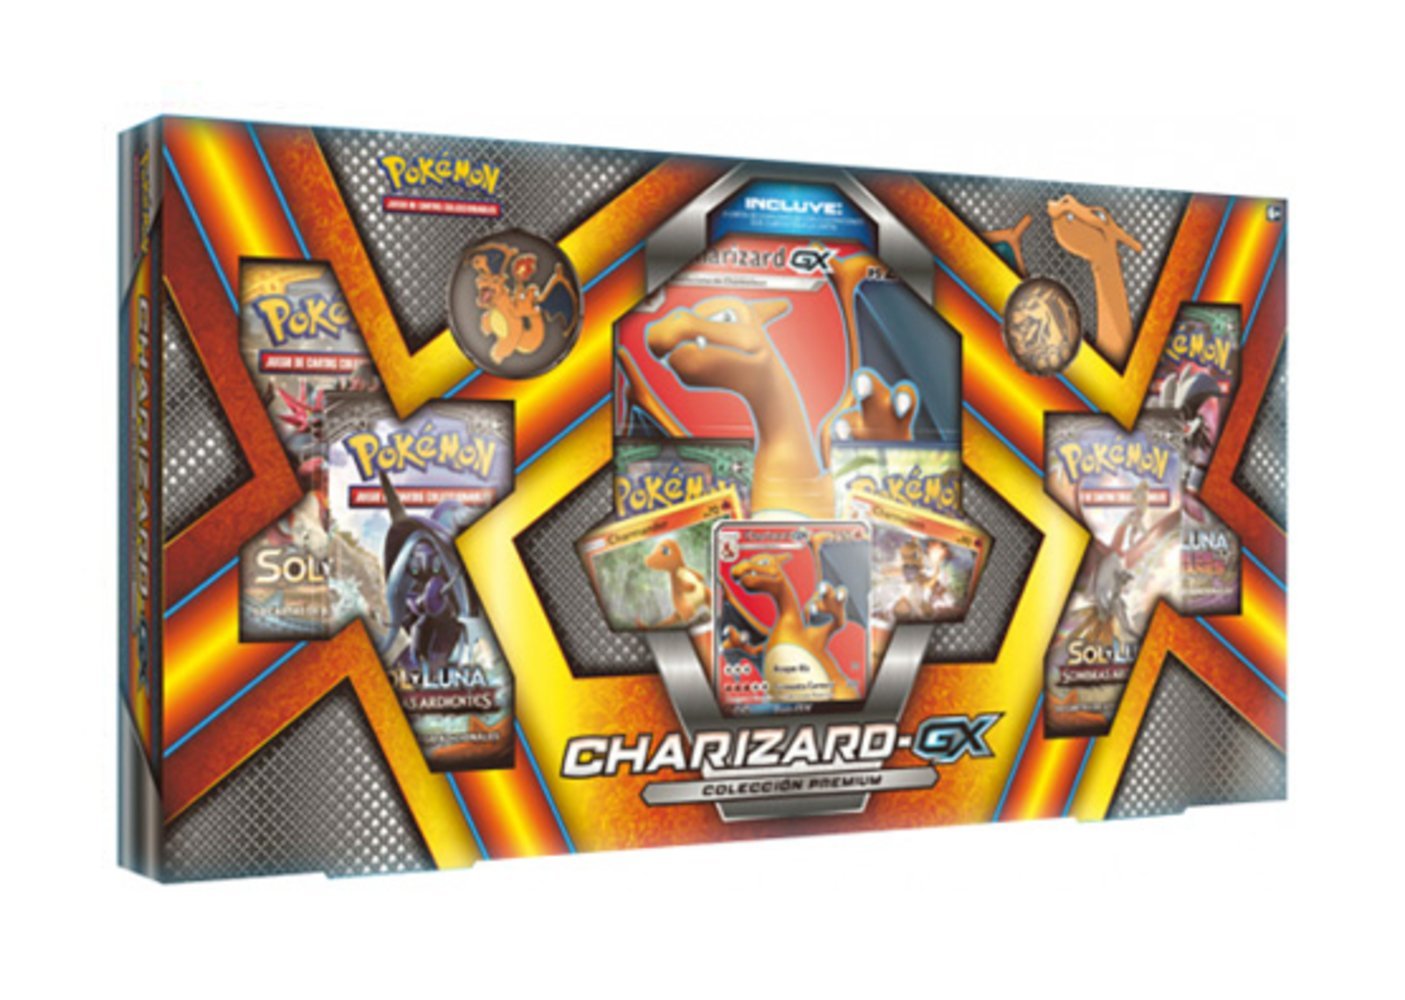 POKEMON: CHARIZARD GX BOX